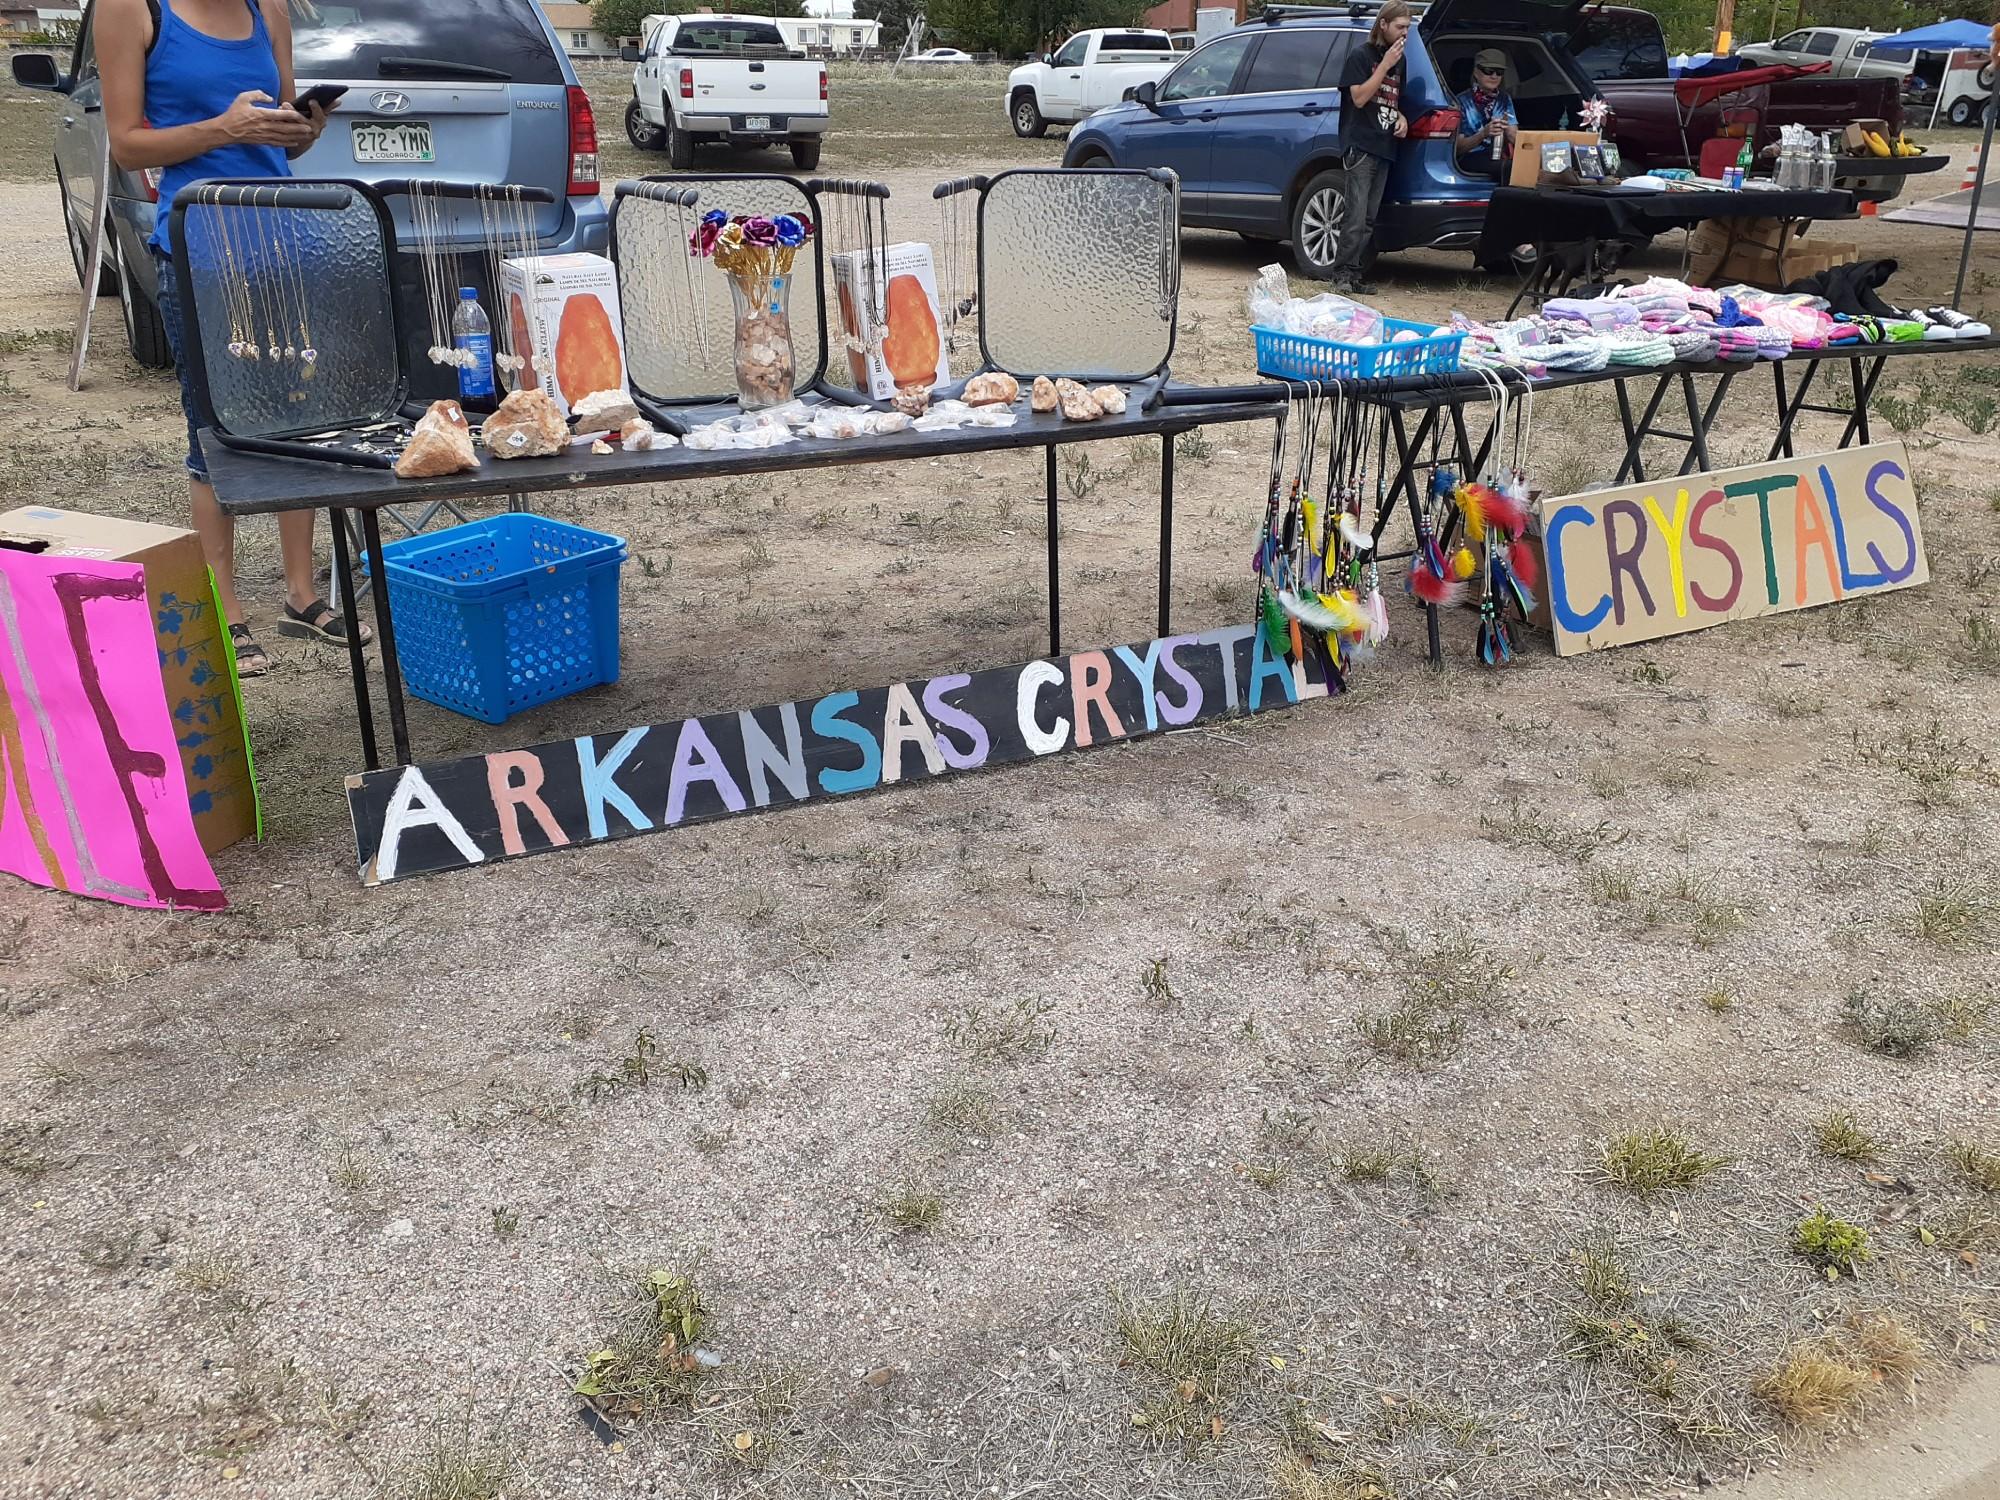 Arkansas Crystal stand